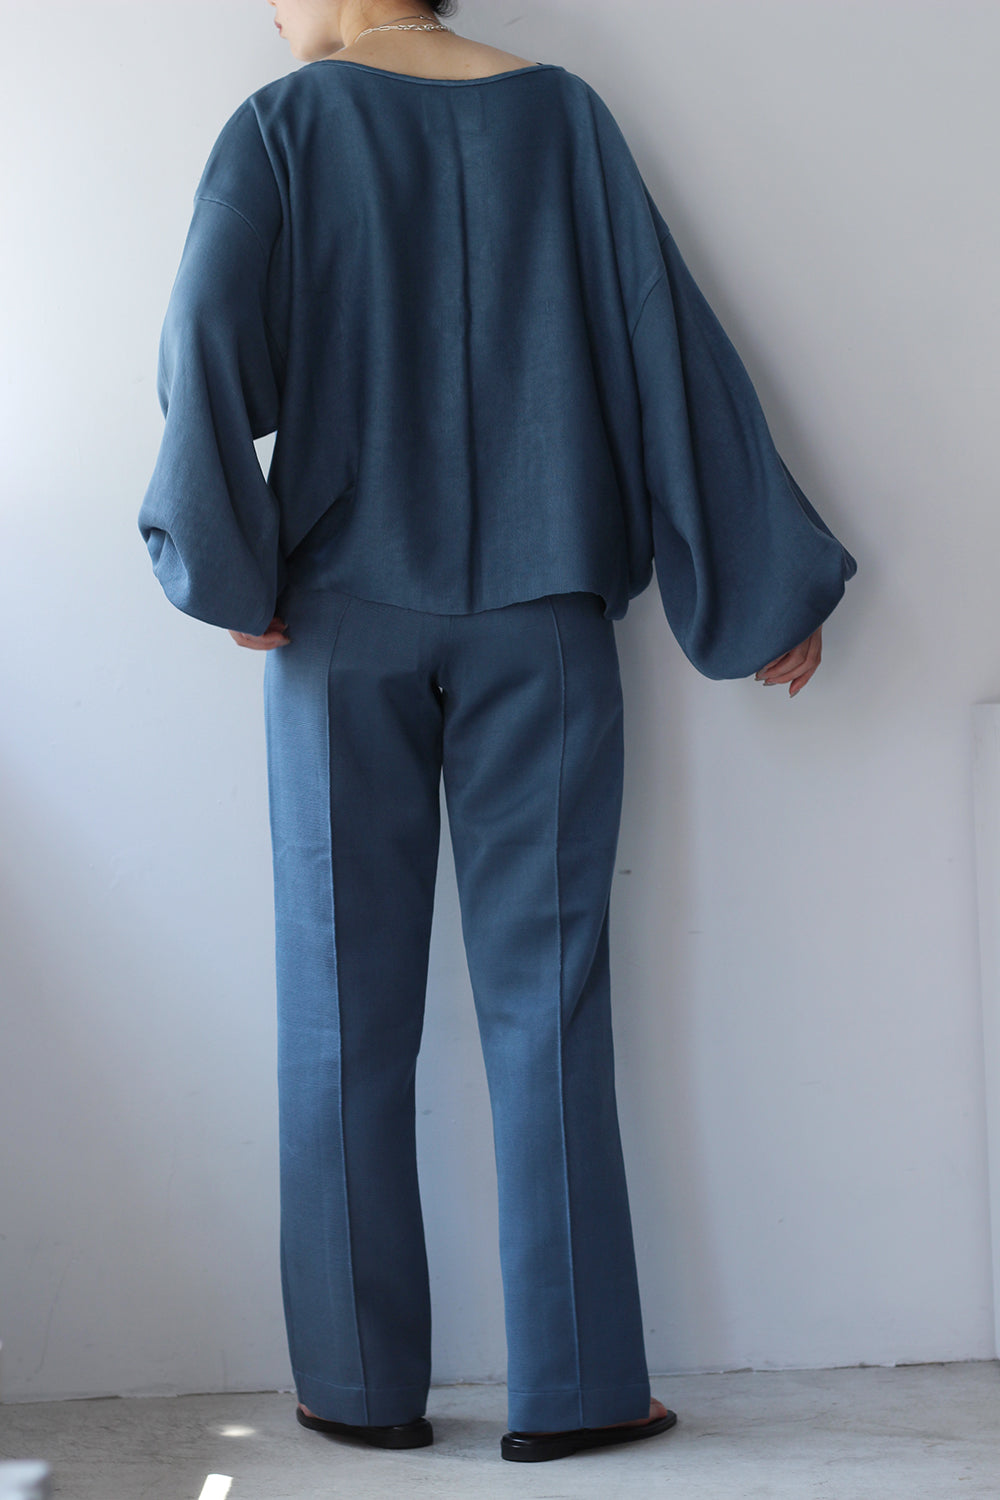 charrita "pantalon fino" (sax blue)